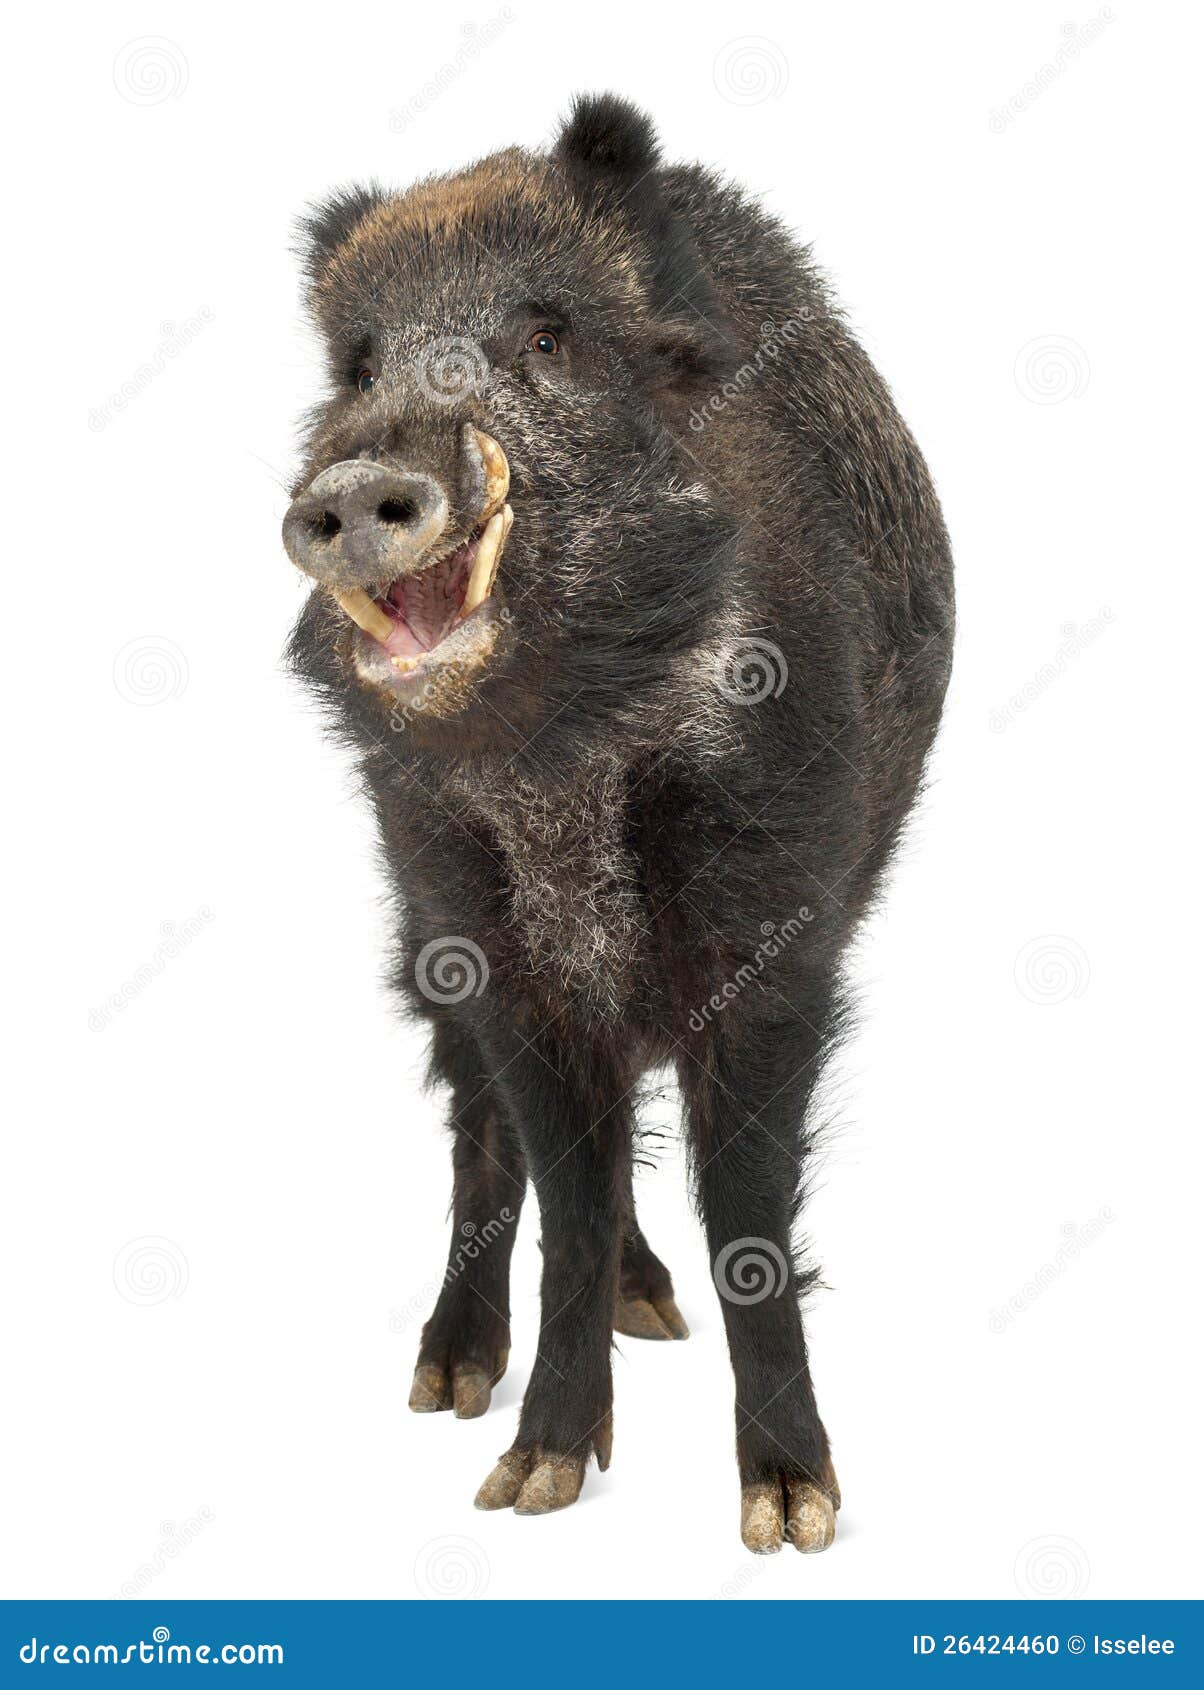 wild boar, also wild pig, sus scrofa